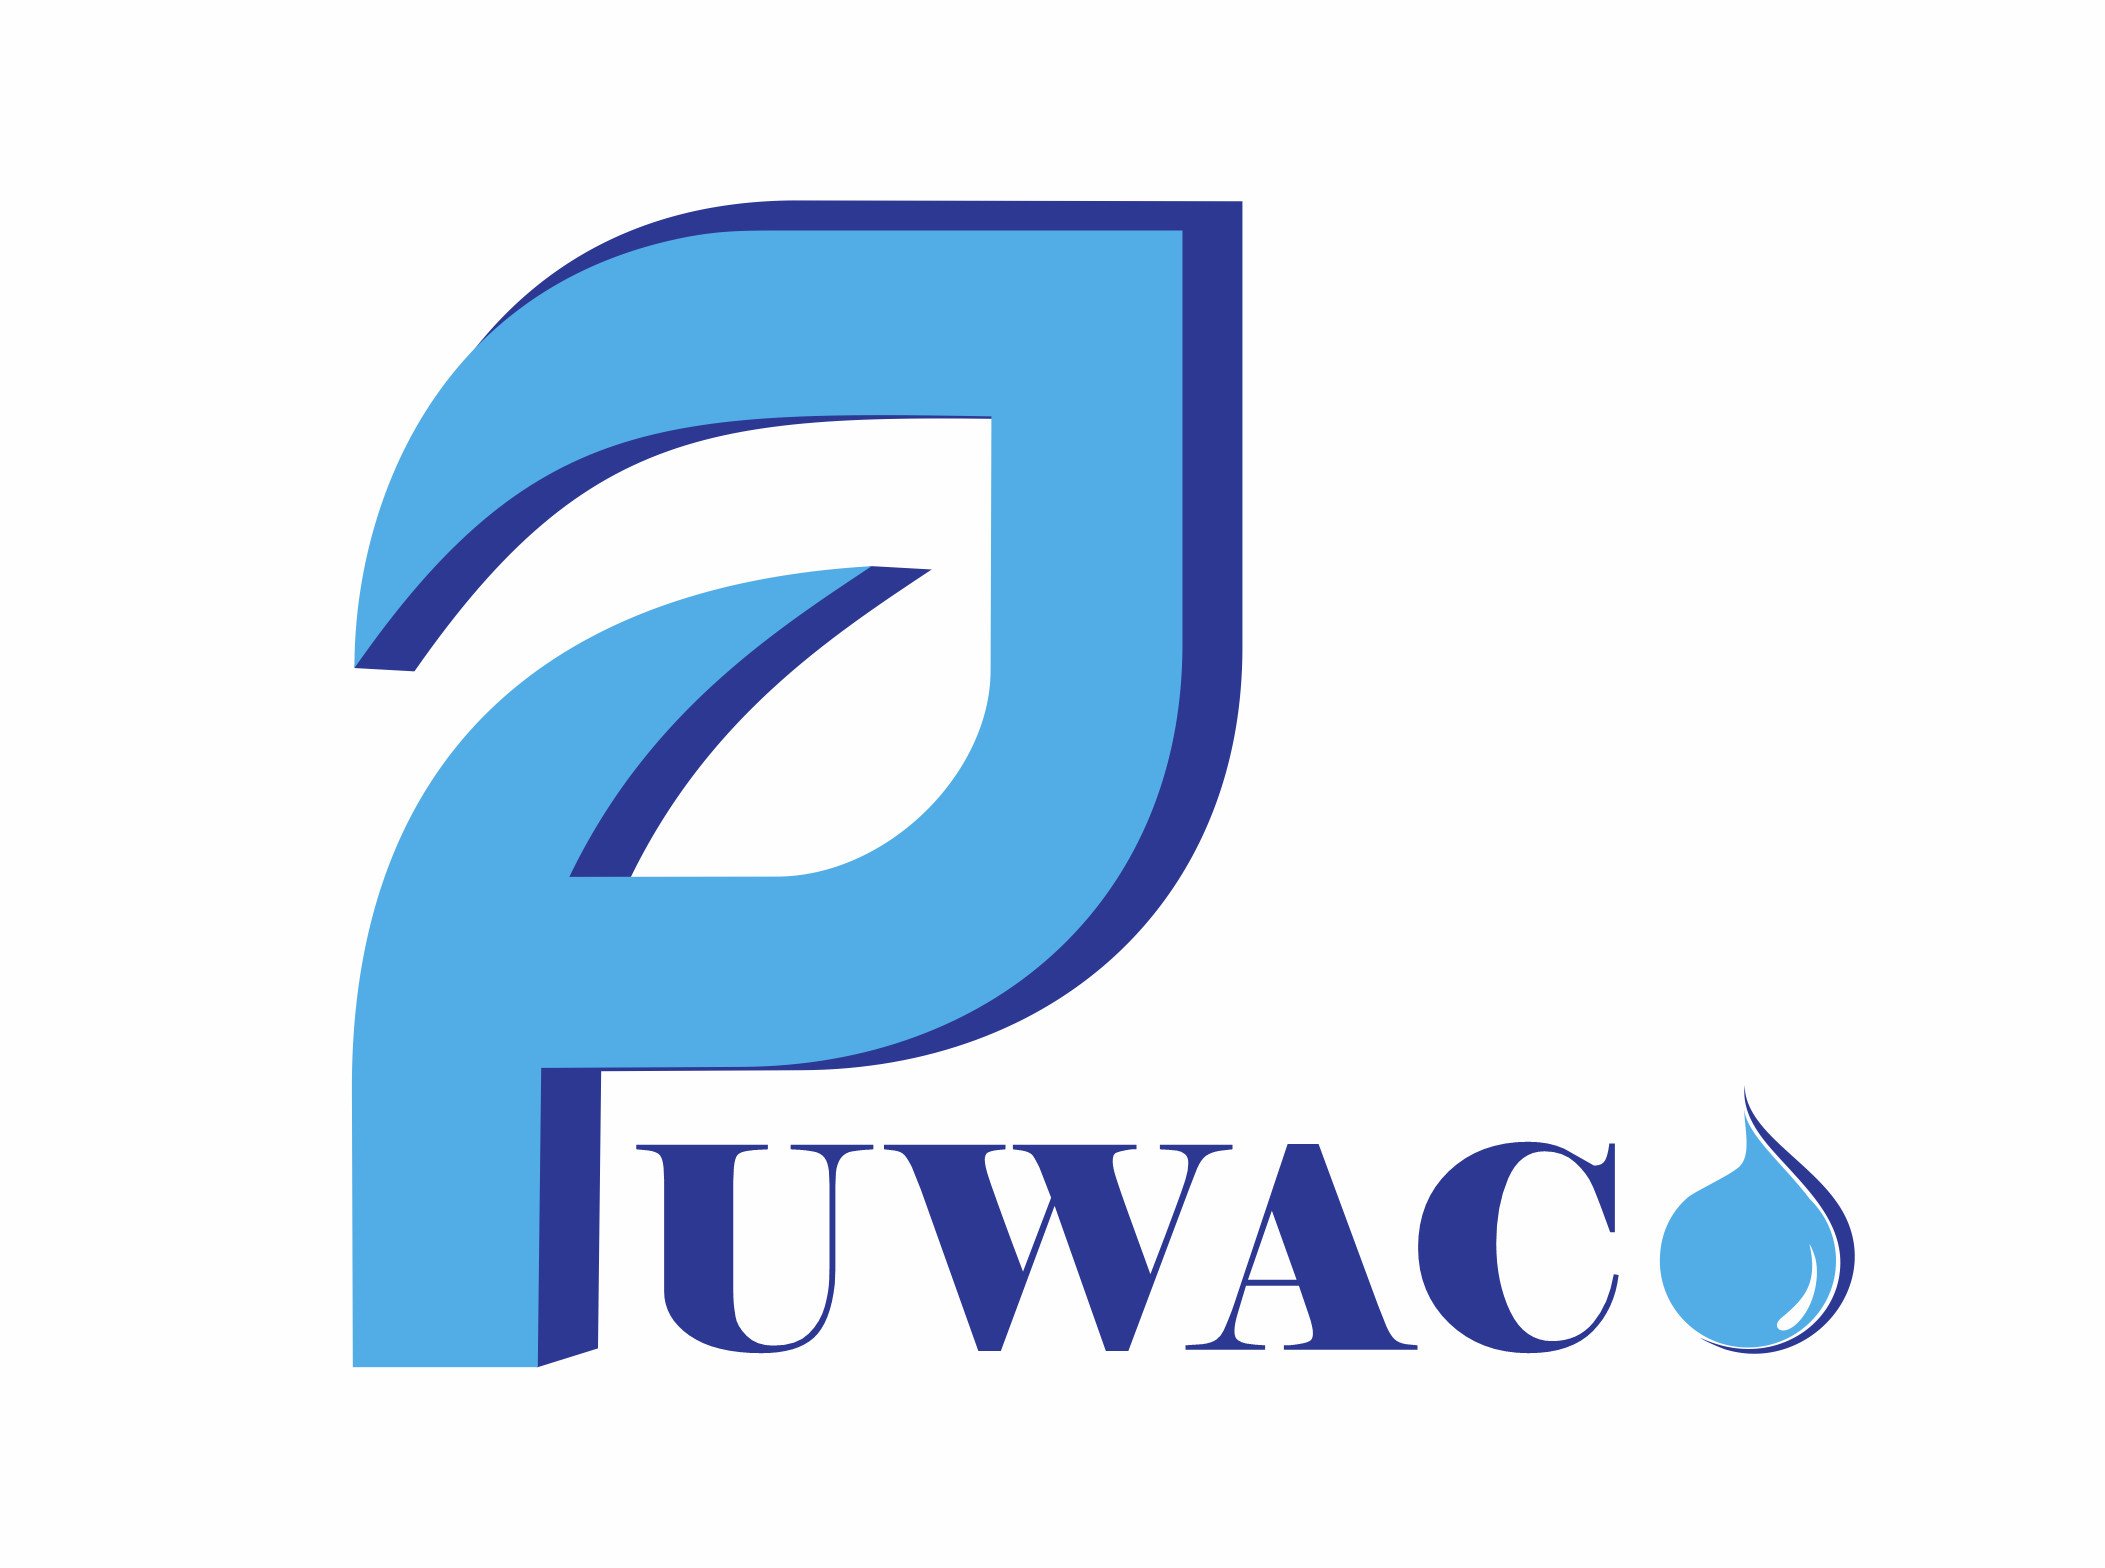 logo puwaco